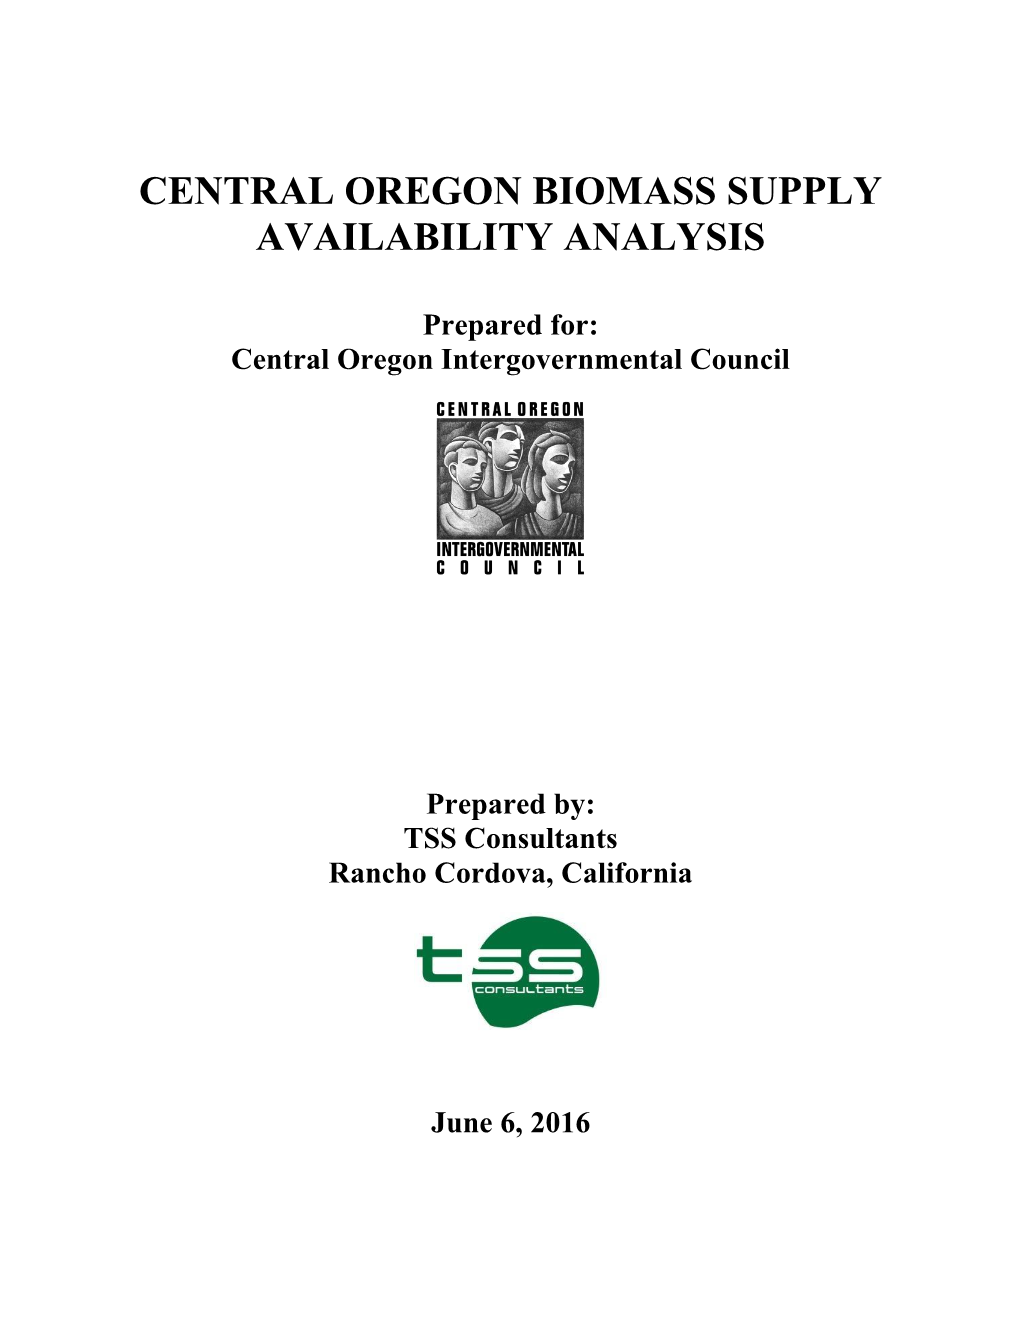 Central Oregon Biomass Supply Availability Analysis (PDF)